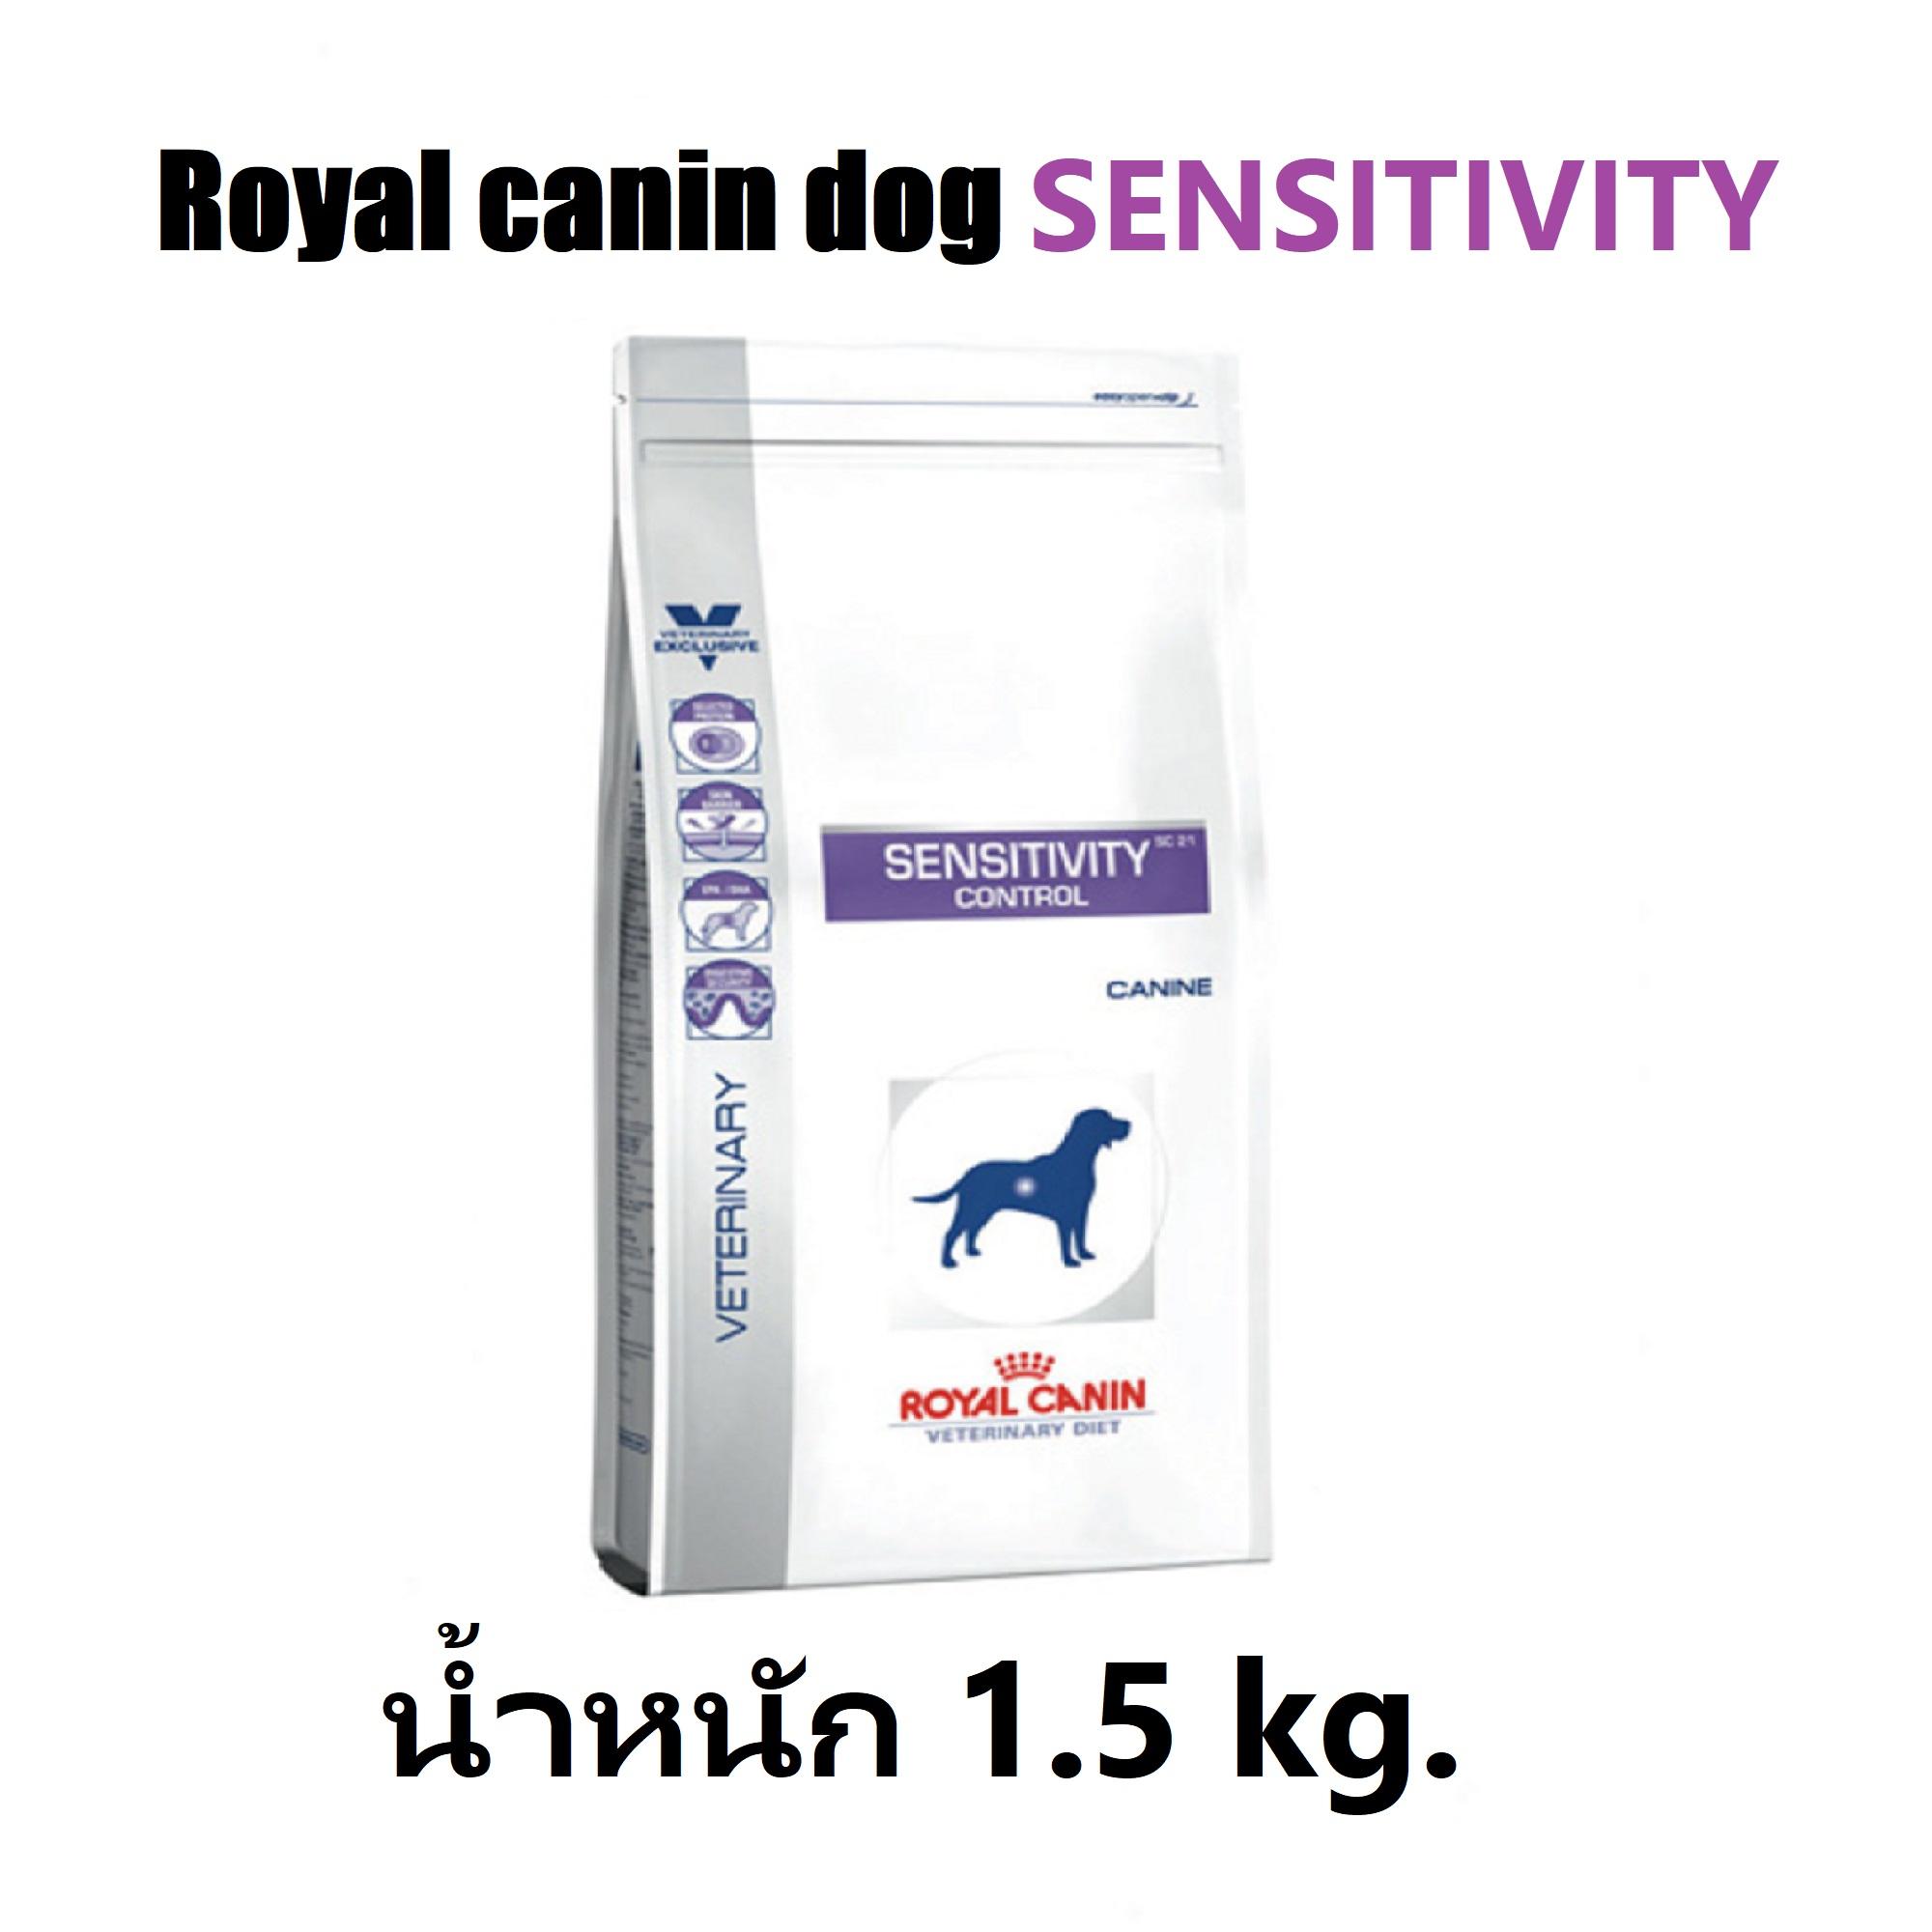 Royal Canin VDiet dog sensitive kg 1.5 Pescara Ferramenta